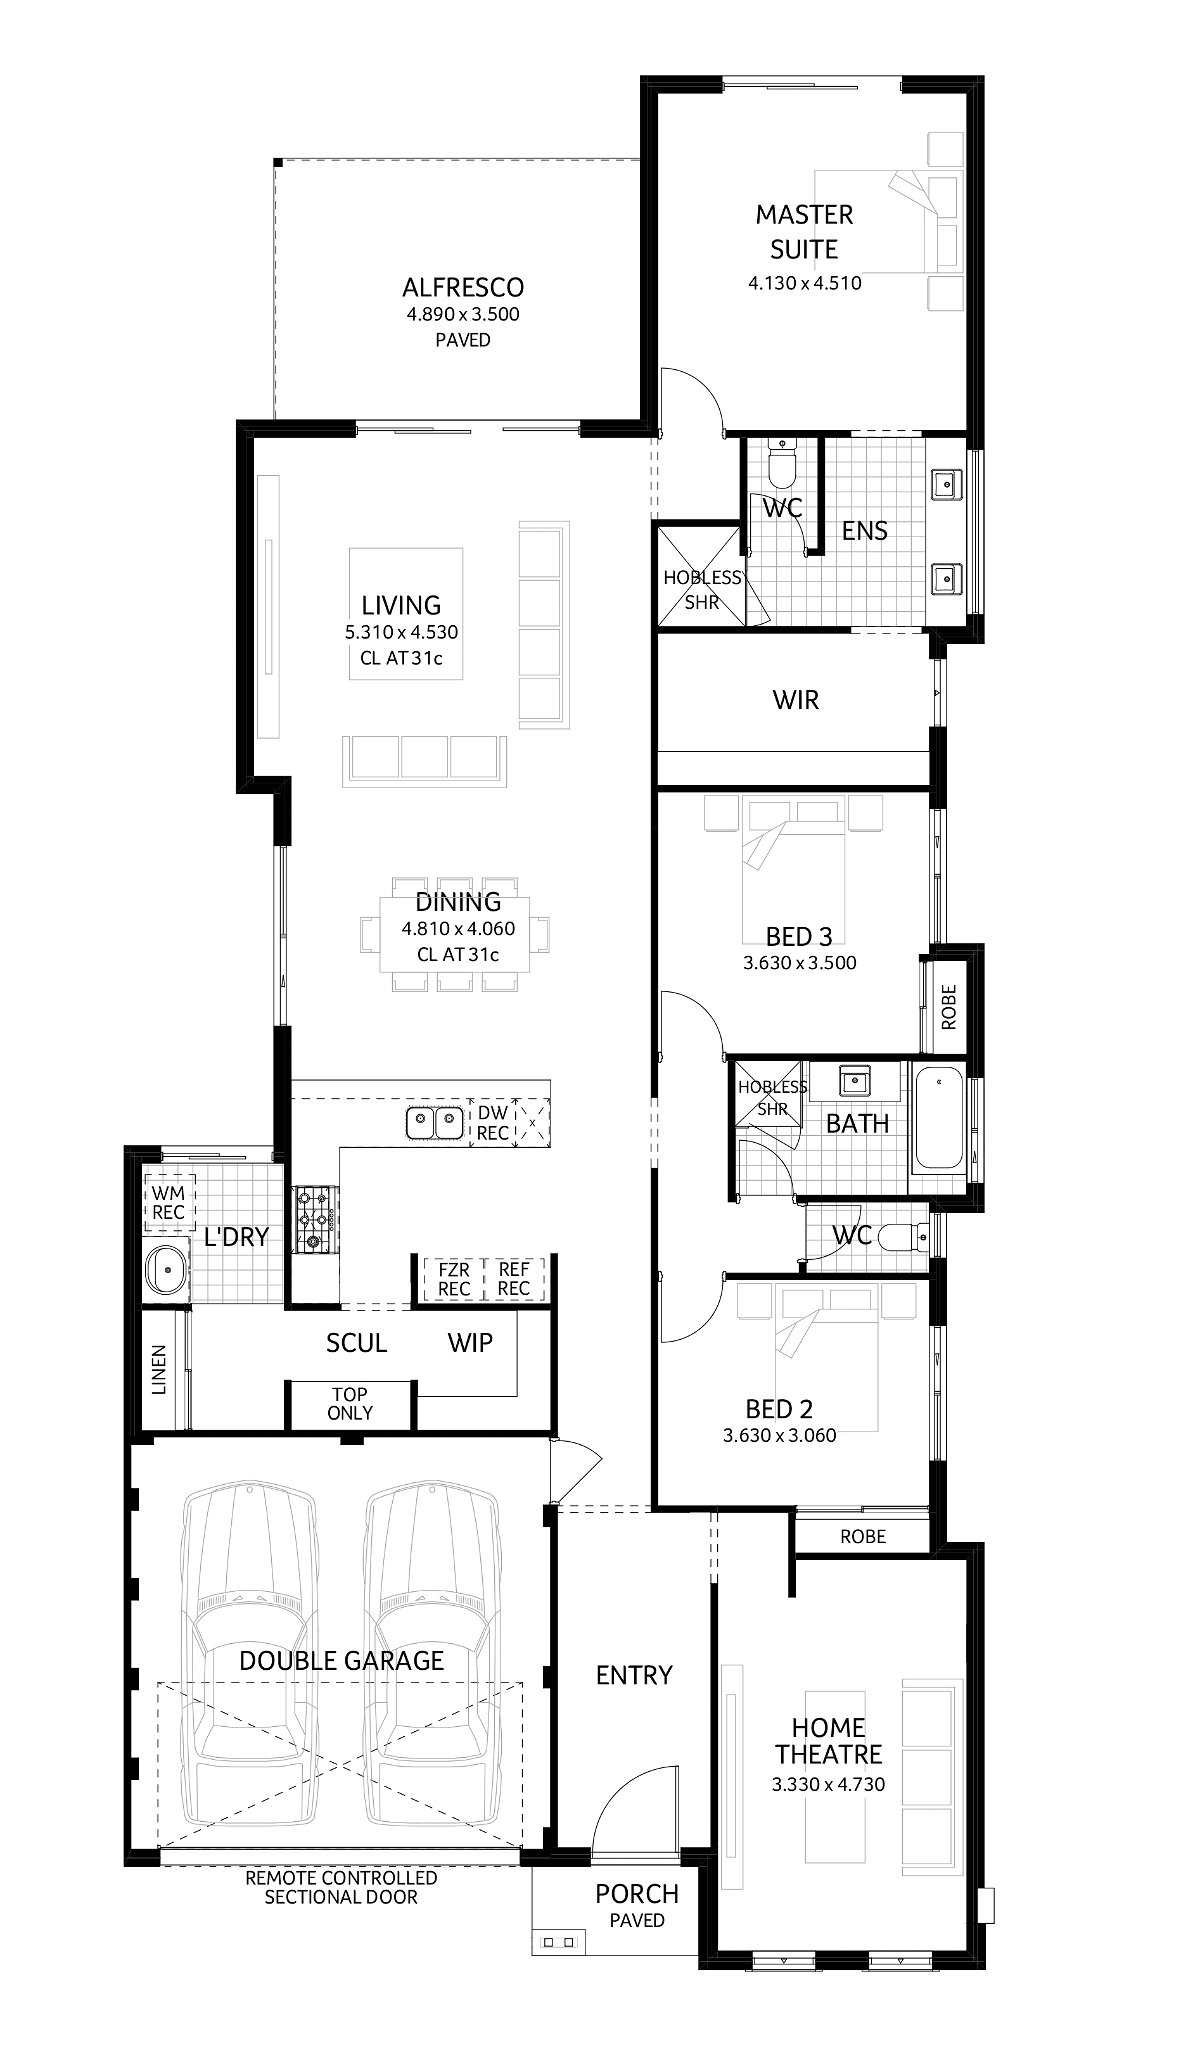 Plunkett Homes - Ningaloo | Federation - Floorplan - Ningaloo Luxe Federation Marketing Plan Cropped Jpg